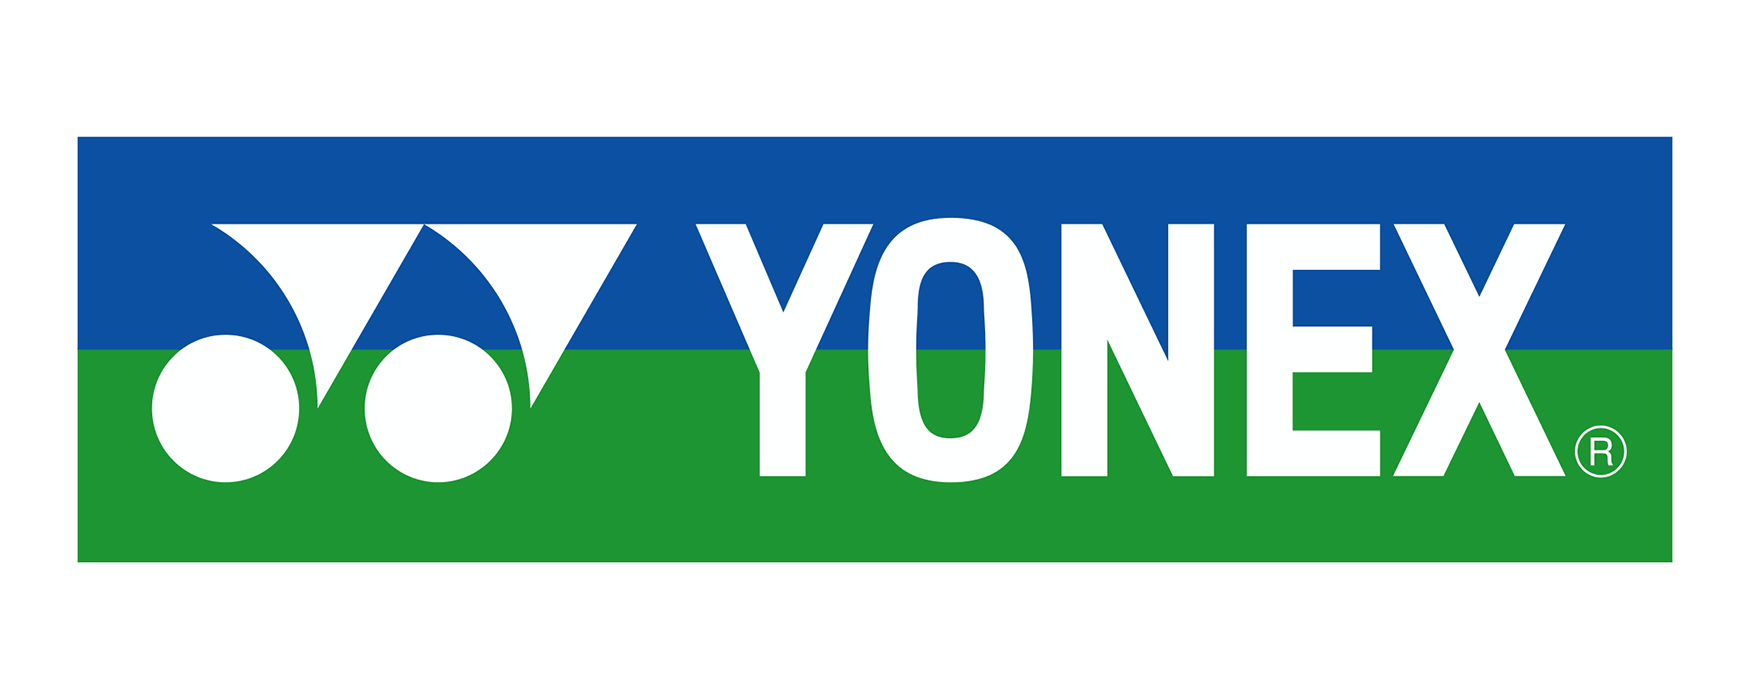 Tennis Racquets, Shoes, Bags, Equipment & News. Yonex, Game logo, Corporate logo